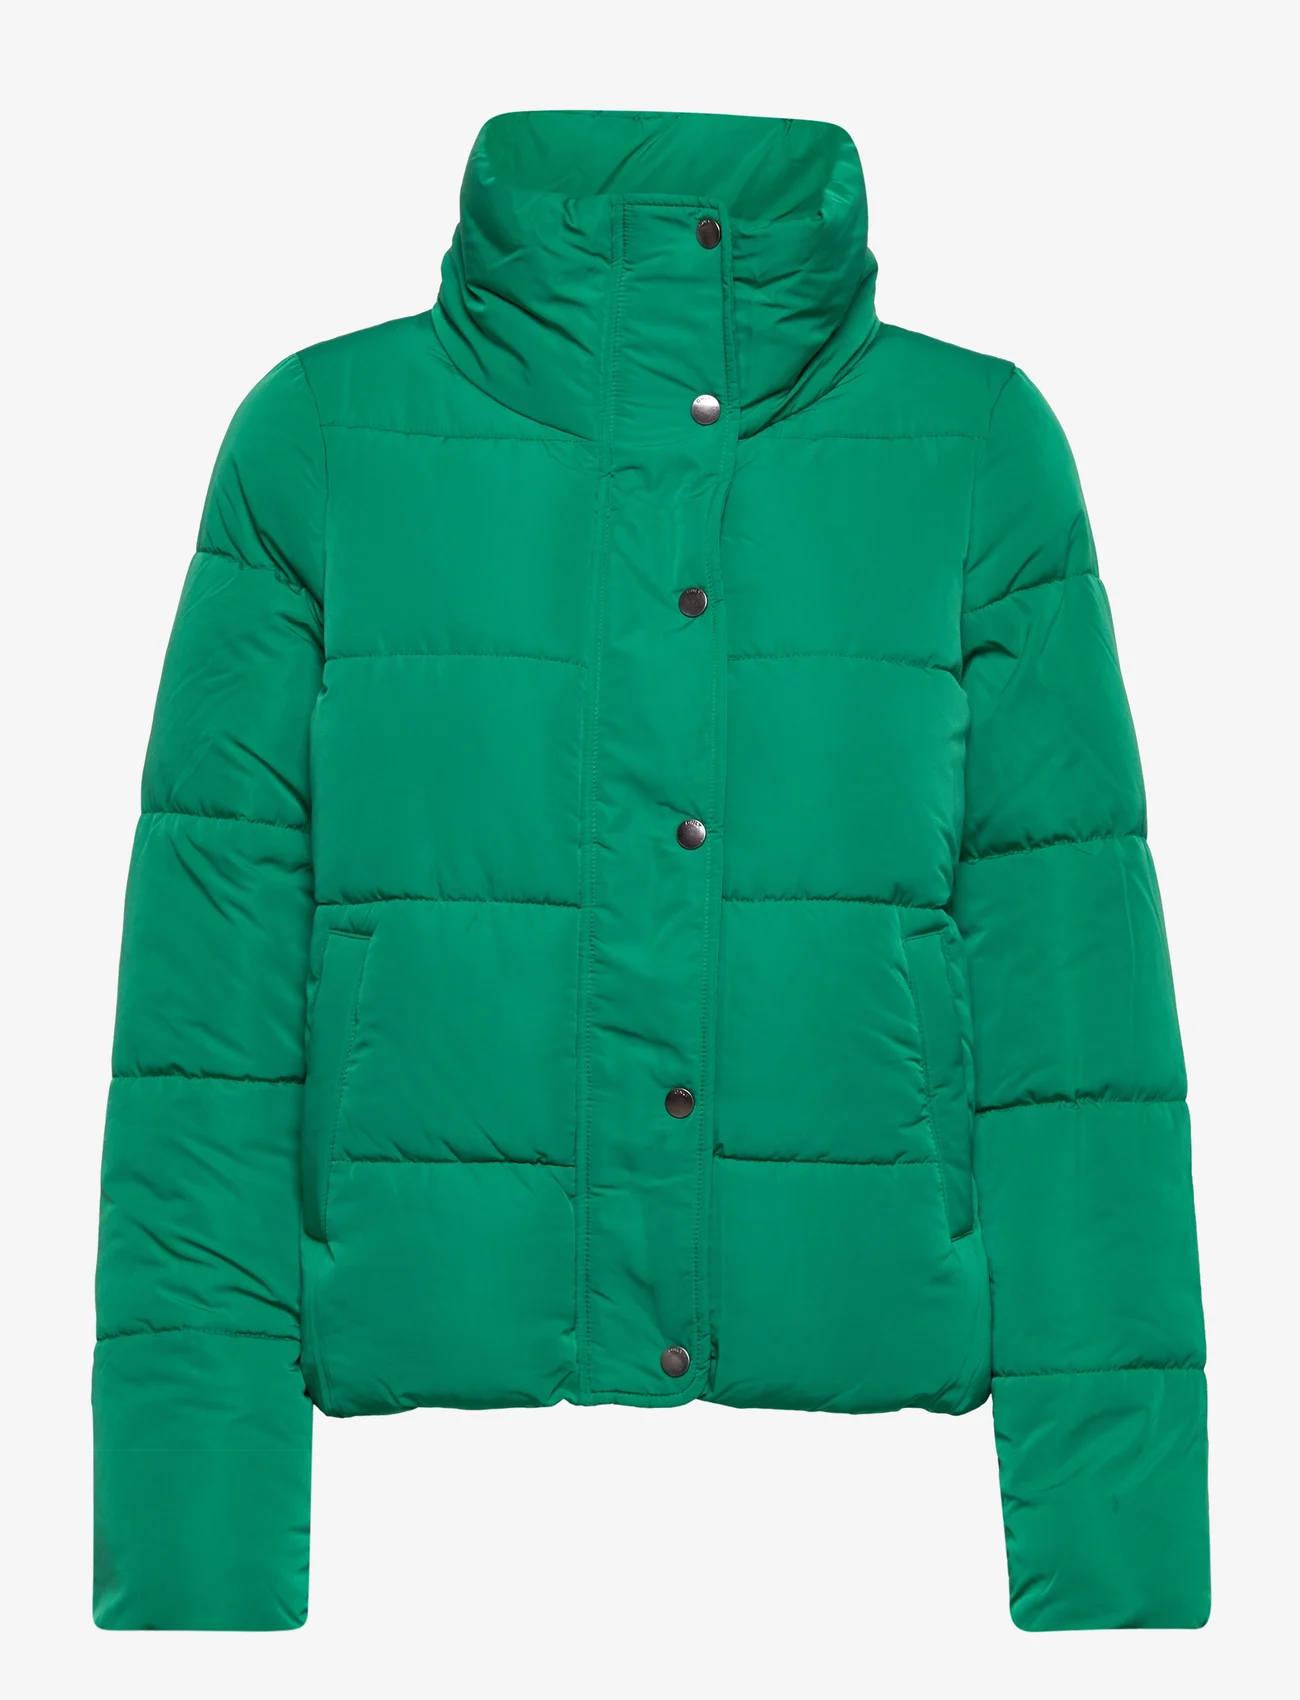 ONLY - ONLCOOL PUFFER JACKET CC OTW - winter jackets - lush meadow - 0